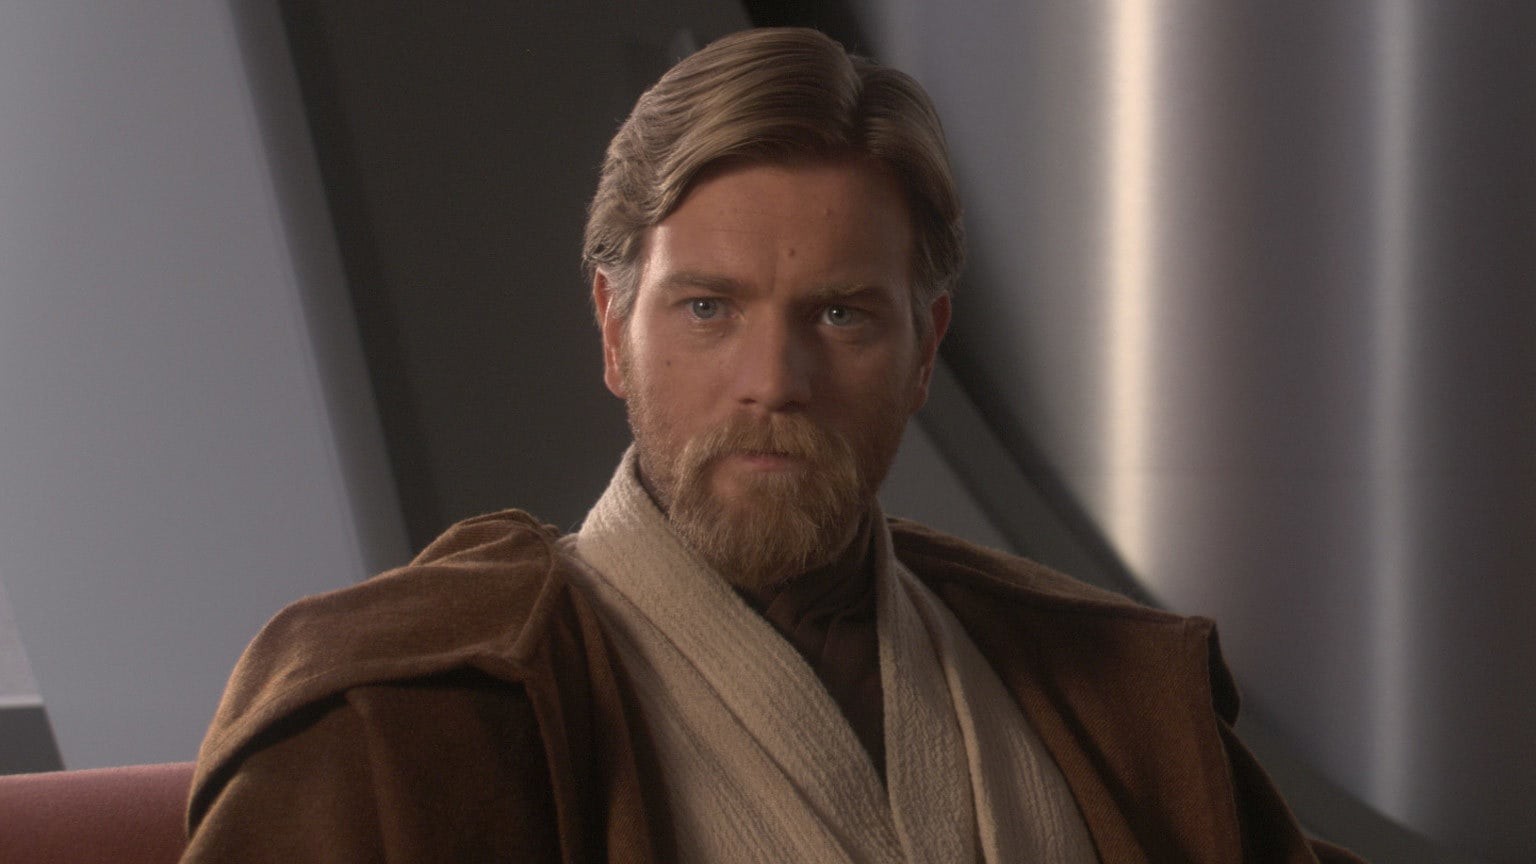 Fans put Obi-Wan Kenobi up for consideration